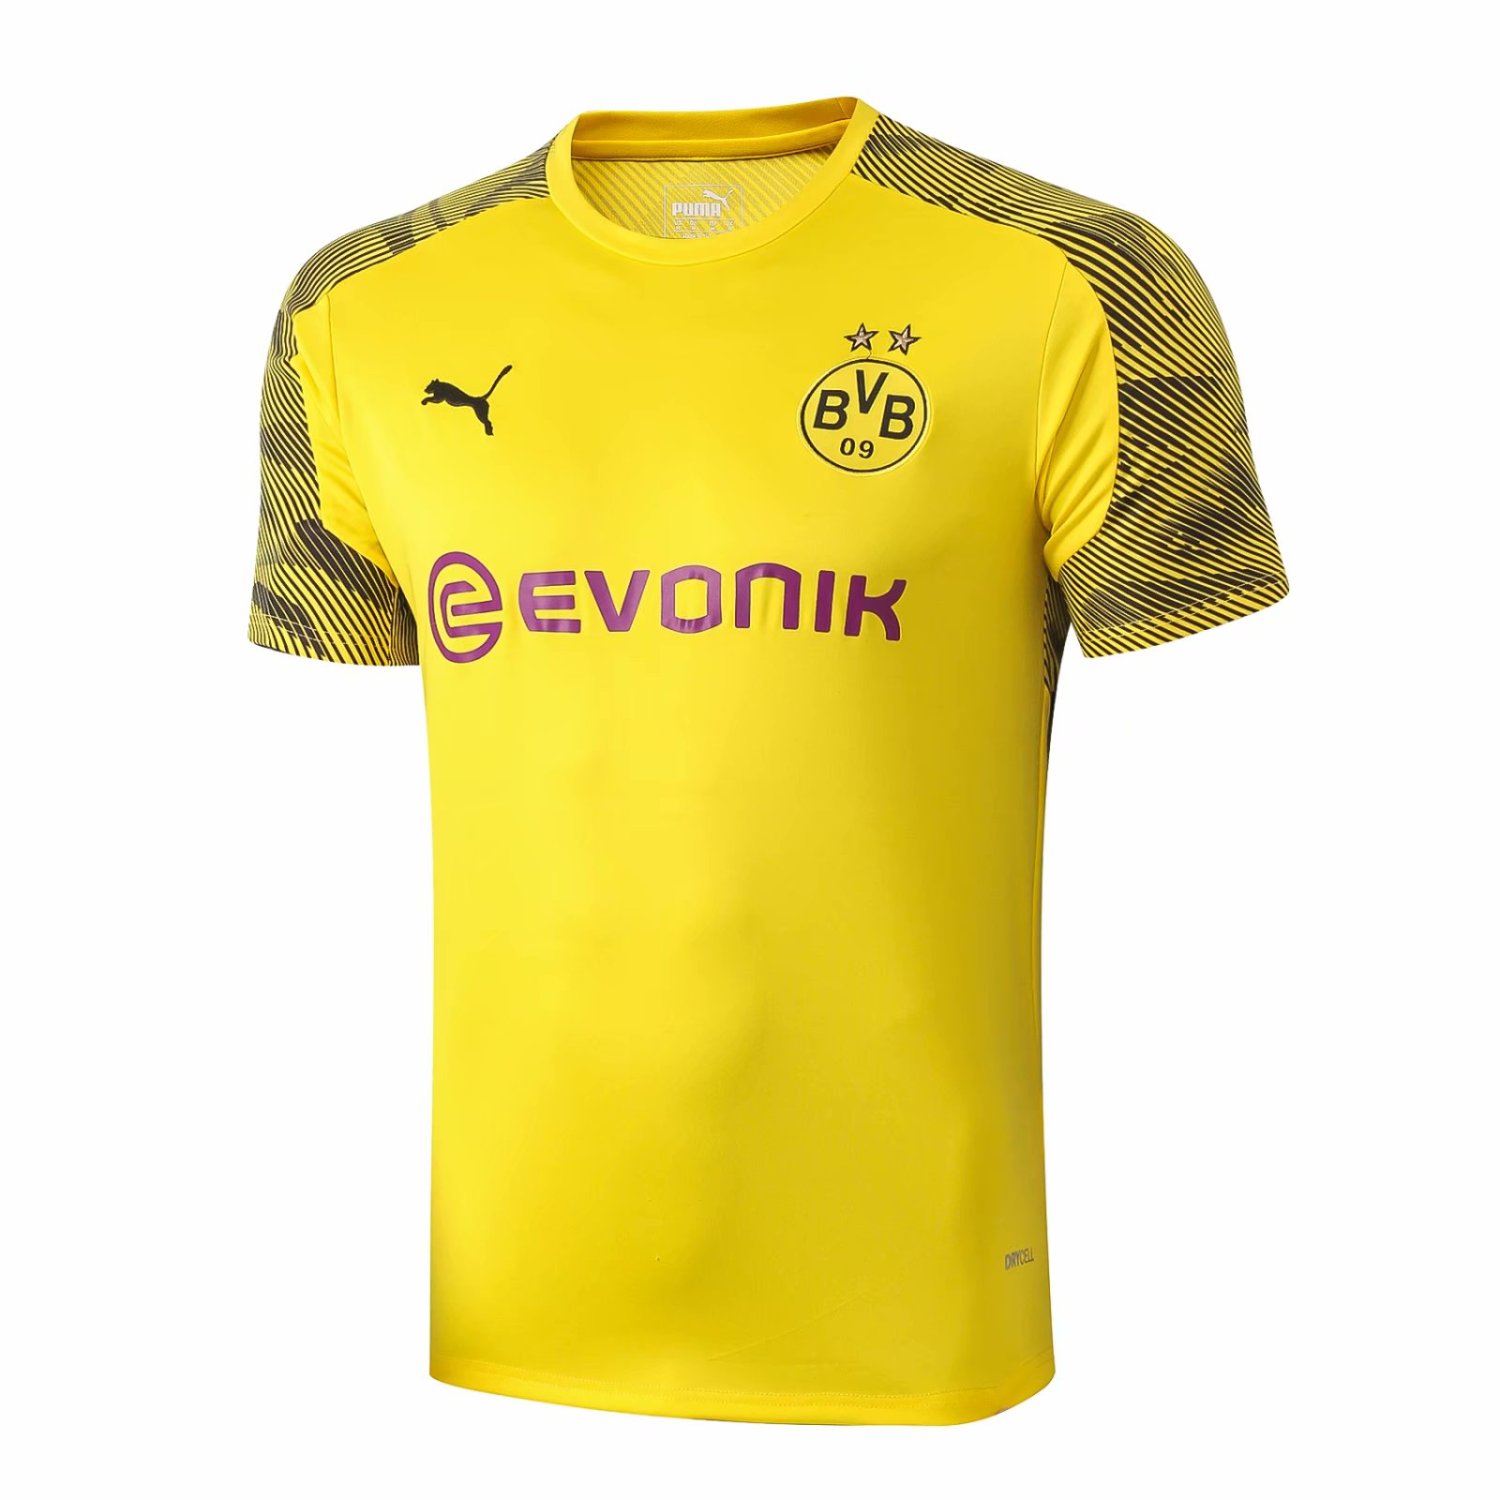 US$ 15.80 - Borussia Dortmund Short Training Yellow Jersey Mens 2019/20 ...